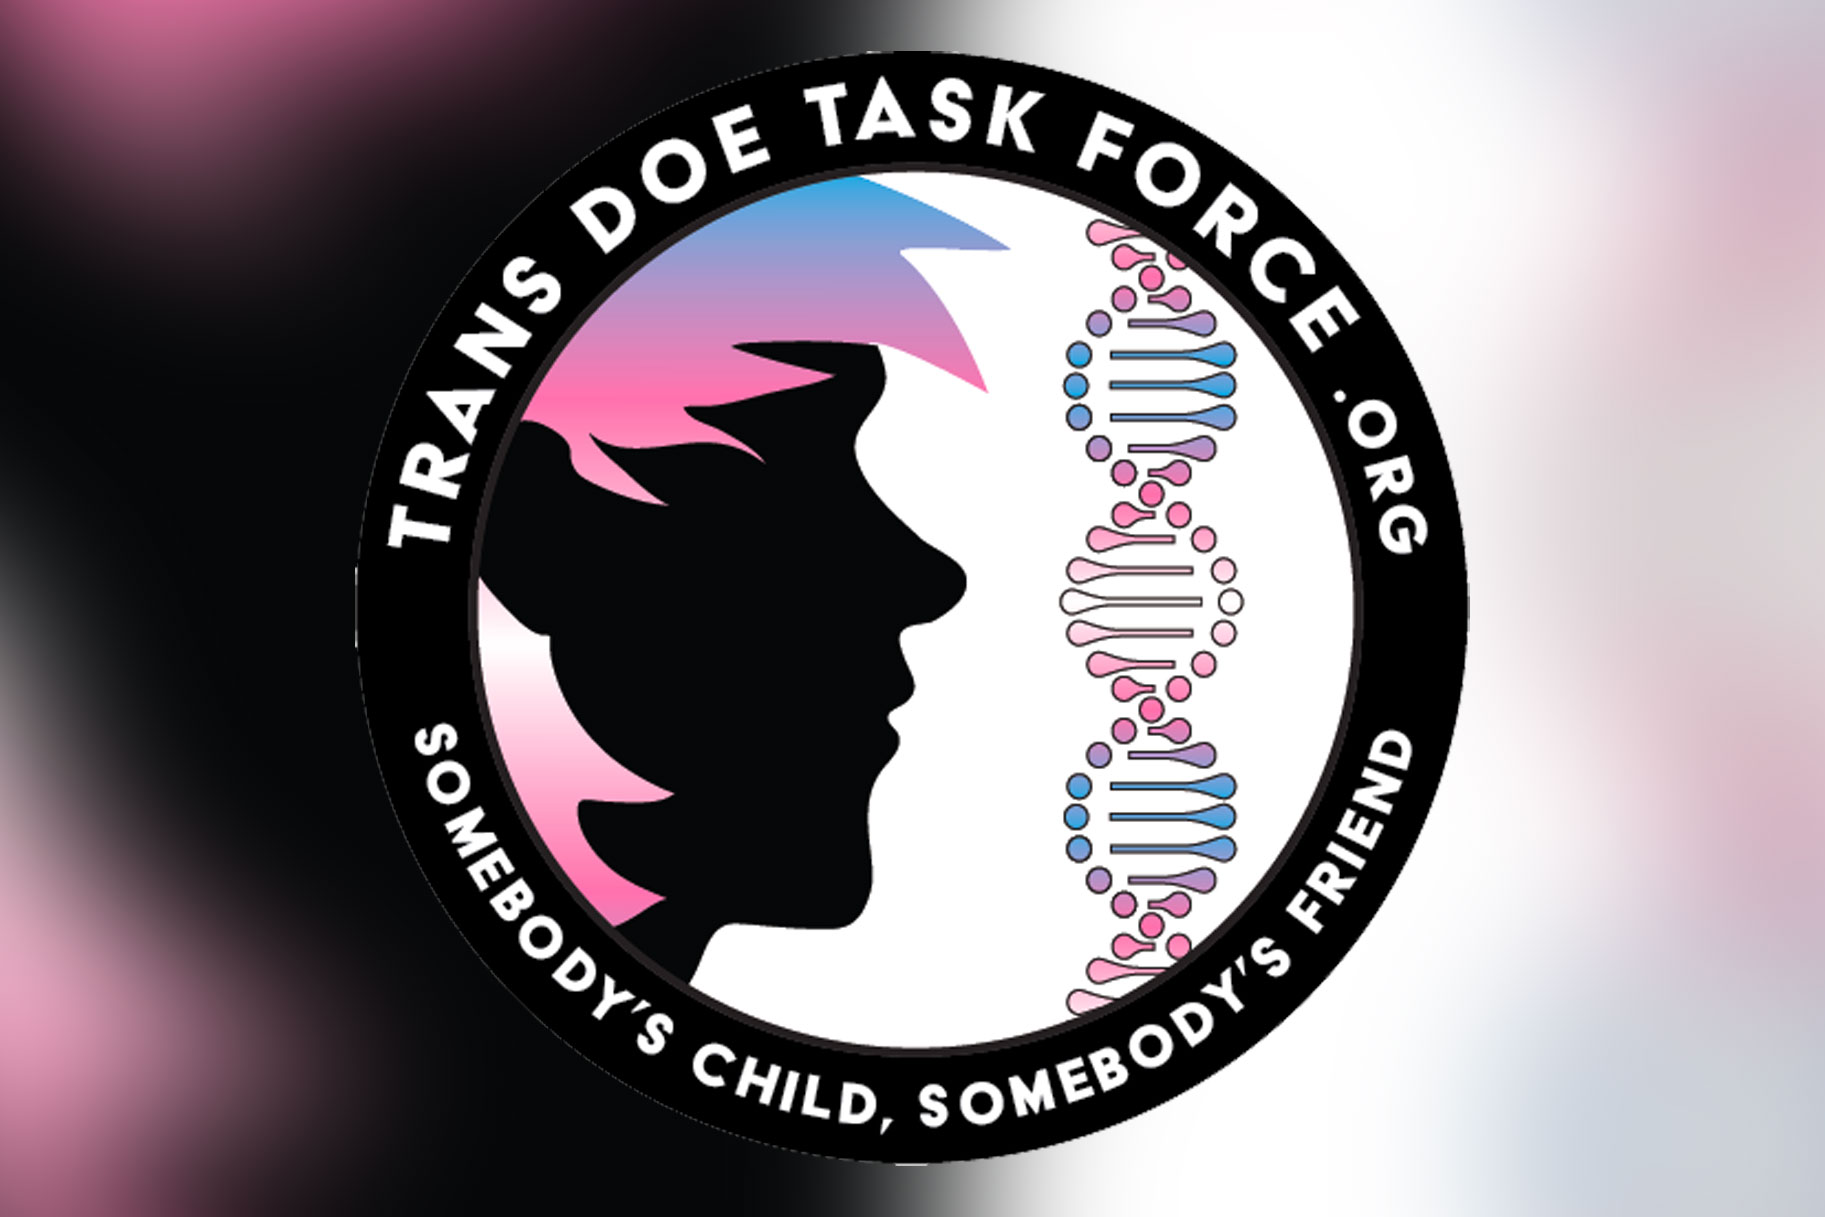 The Trans Doe Task Force logo